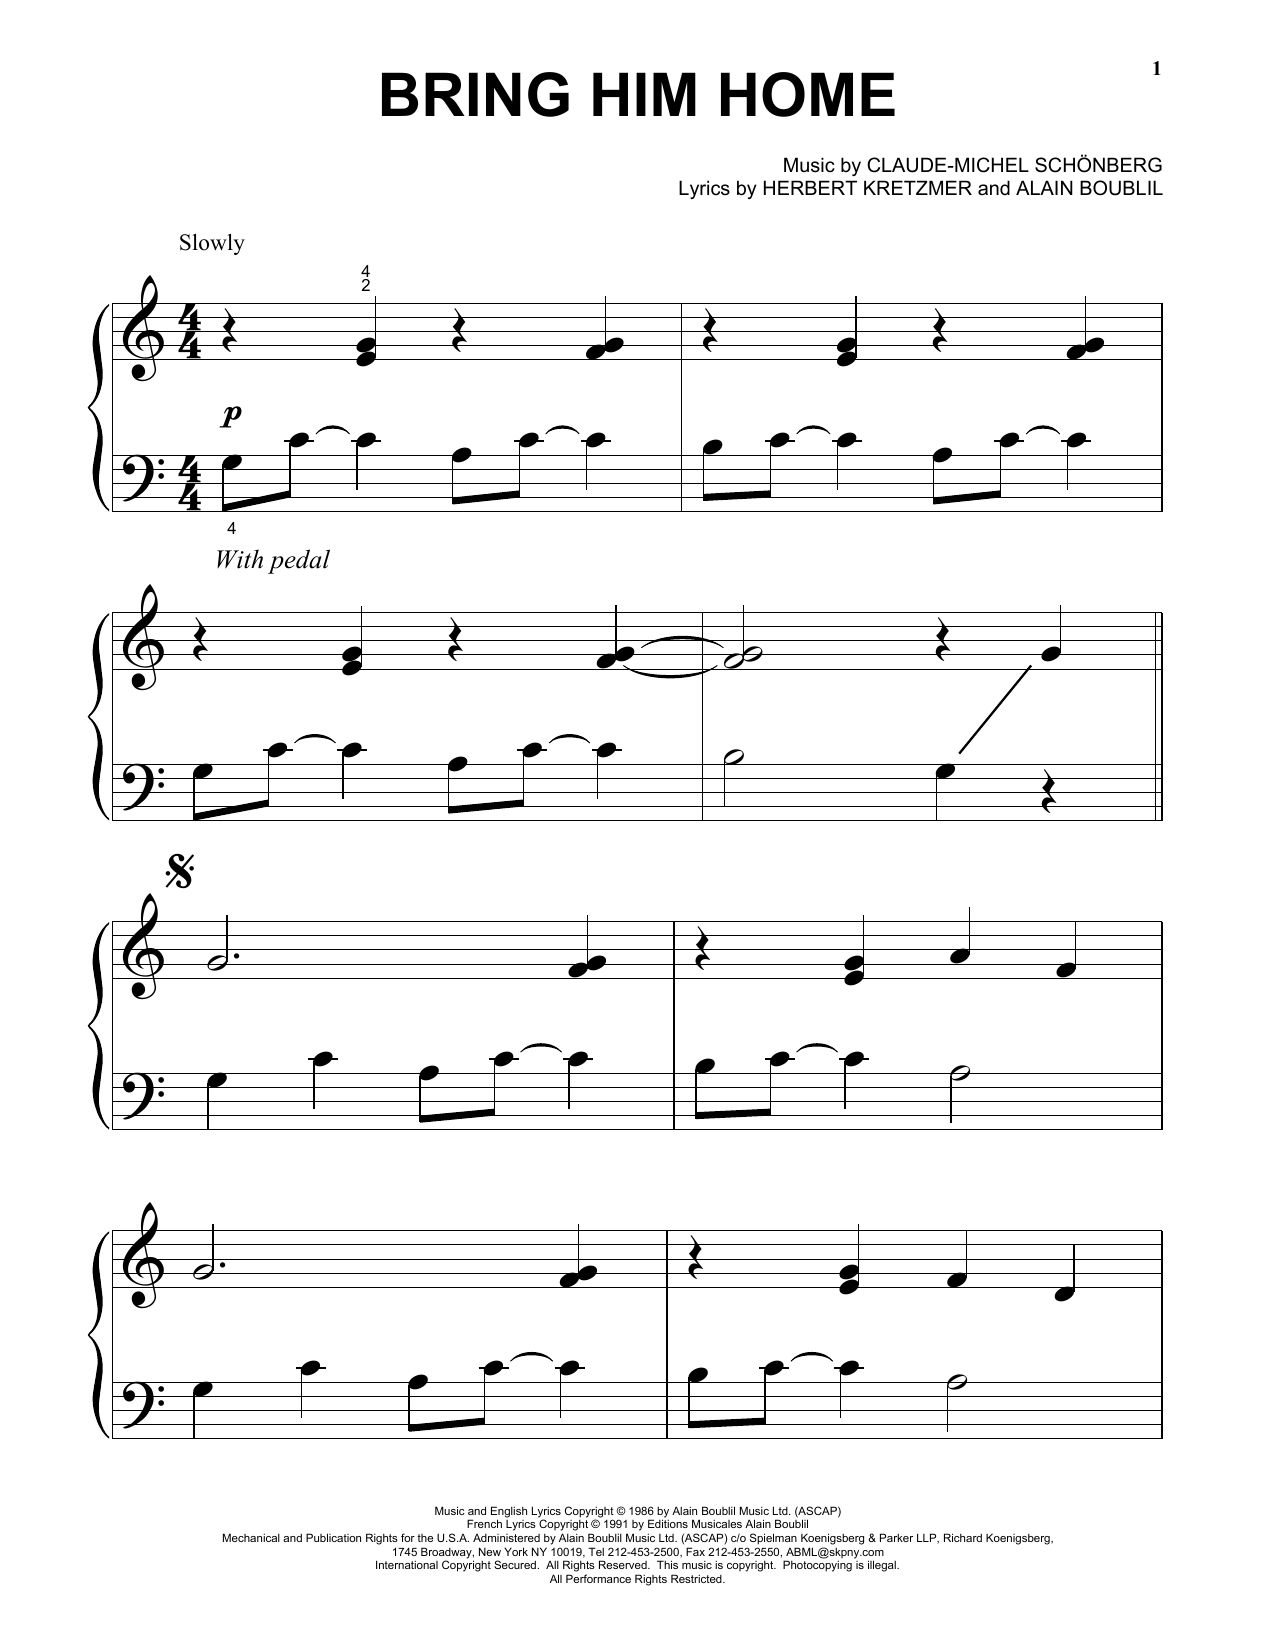 Claude-Michel Schönberg Bring Him Home Sheet Music Notes & Chords for Trumpet Duet - Download or Print PDF